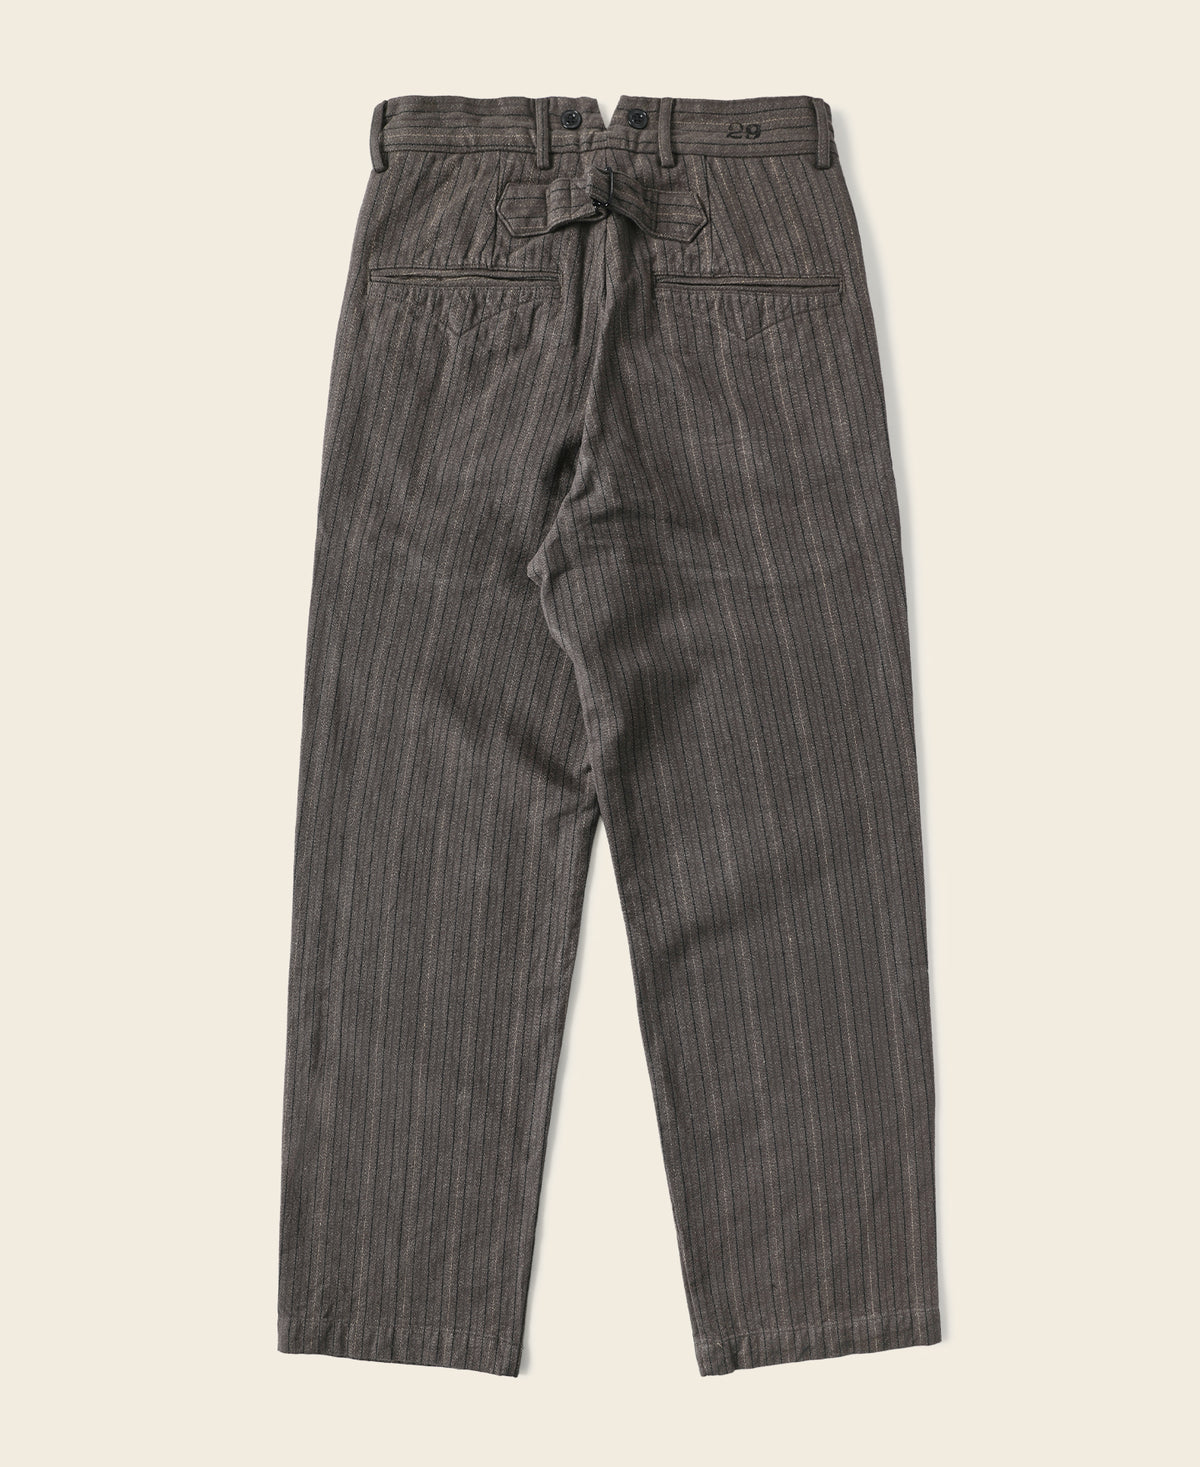 Lot 920 Old Time Stripe Pants